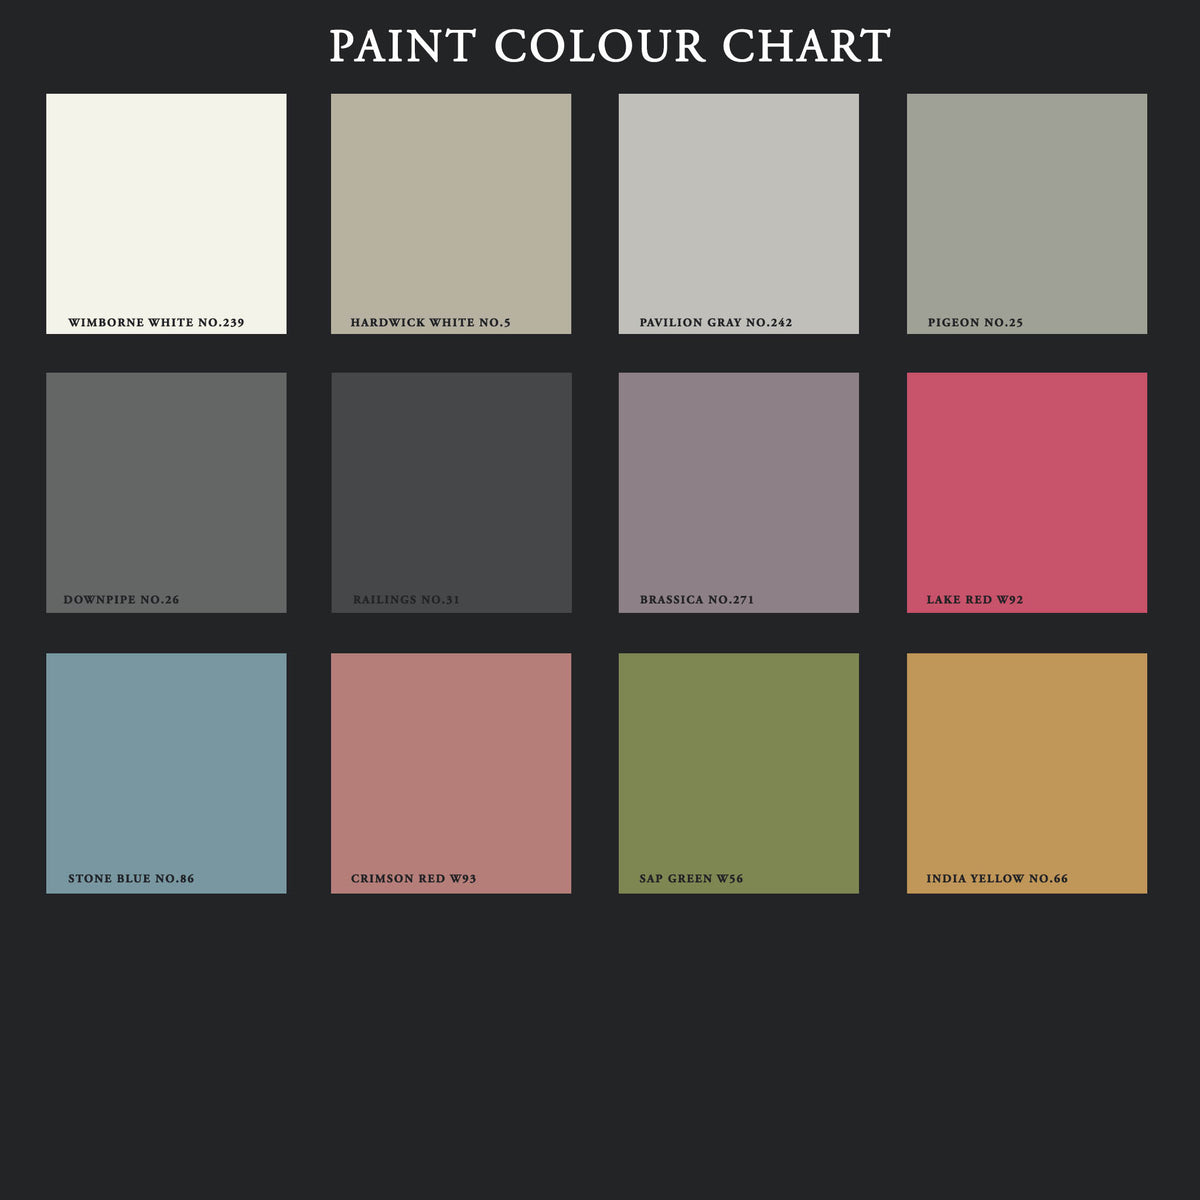 Paint Colour Chart - Garden shades